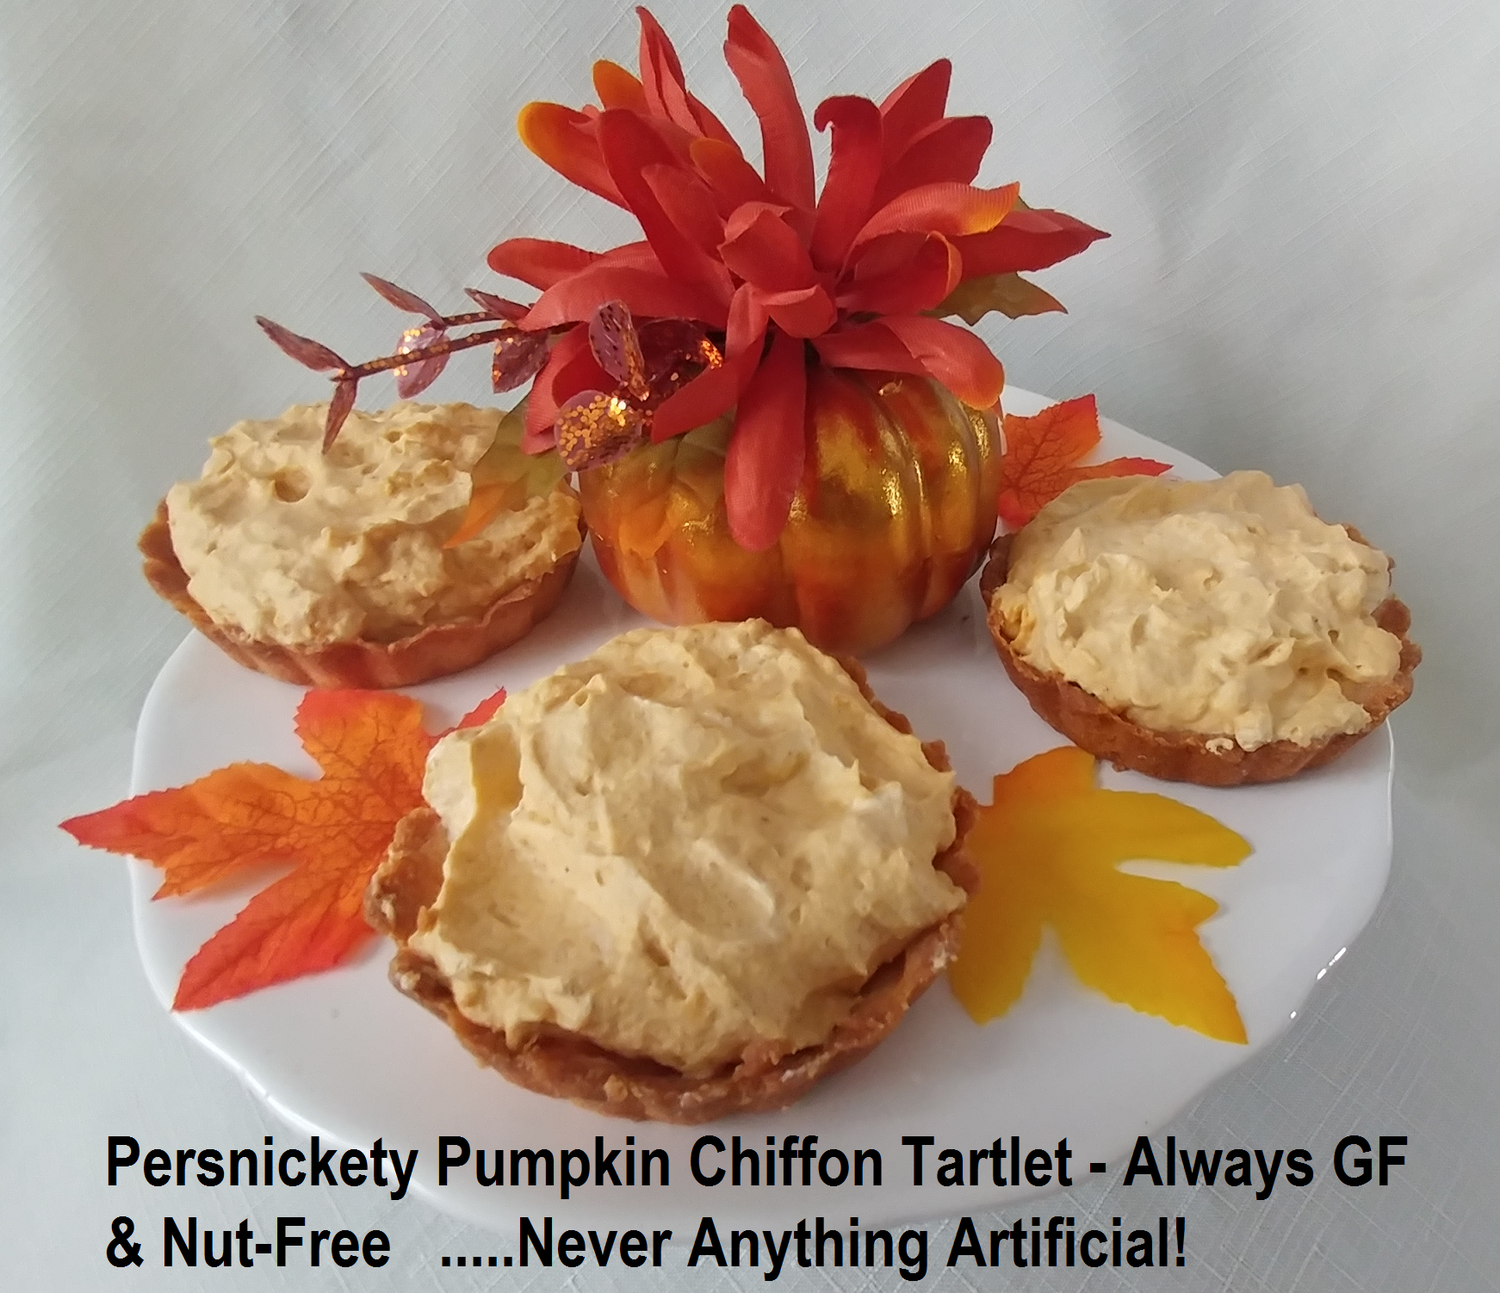 Persnickety Pumpkin Chiffon Tartlets